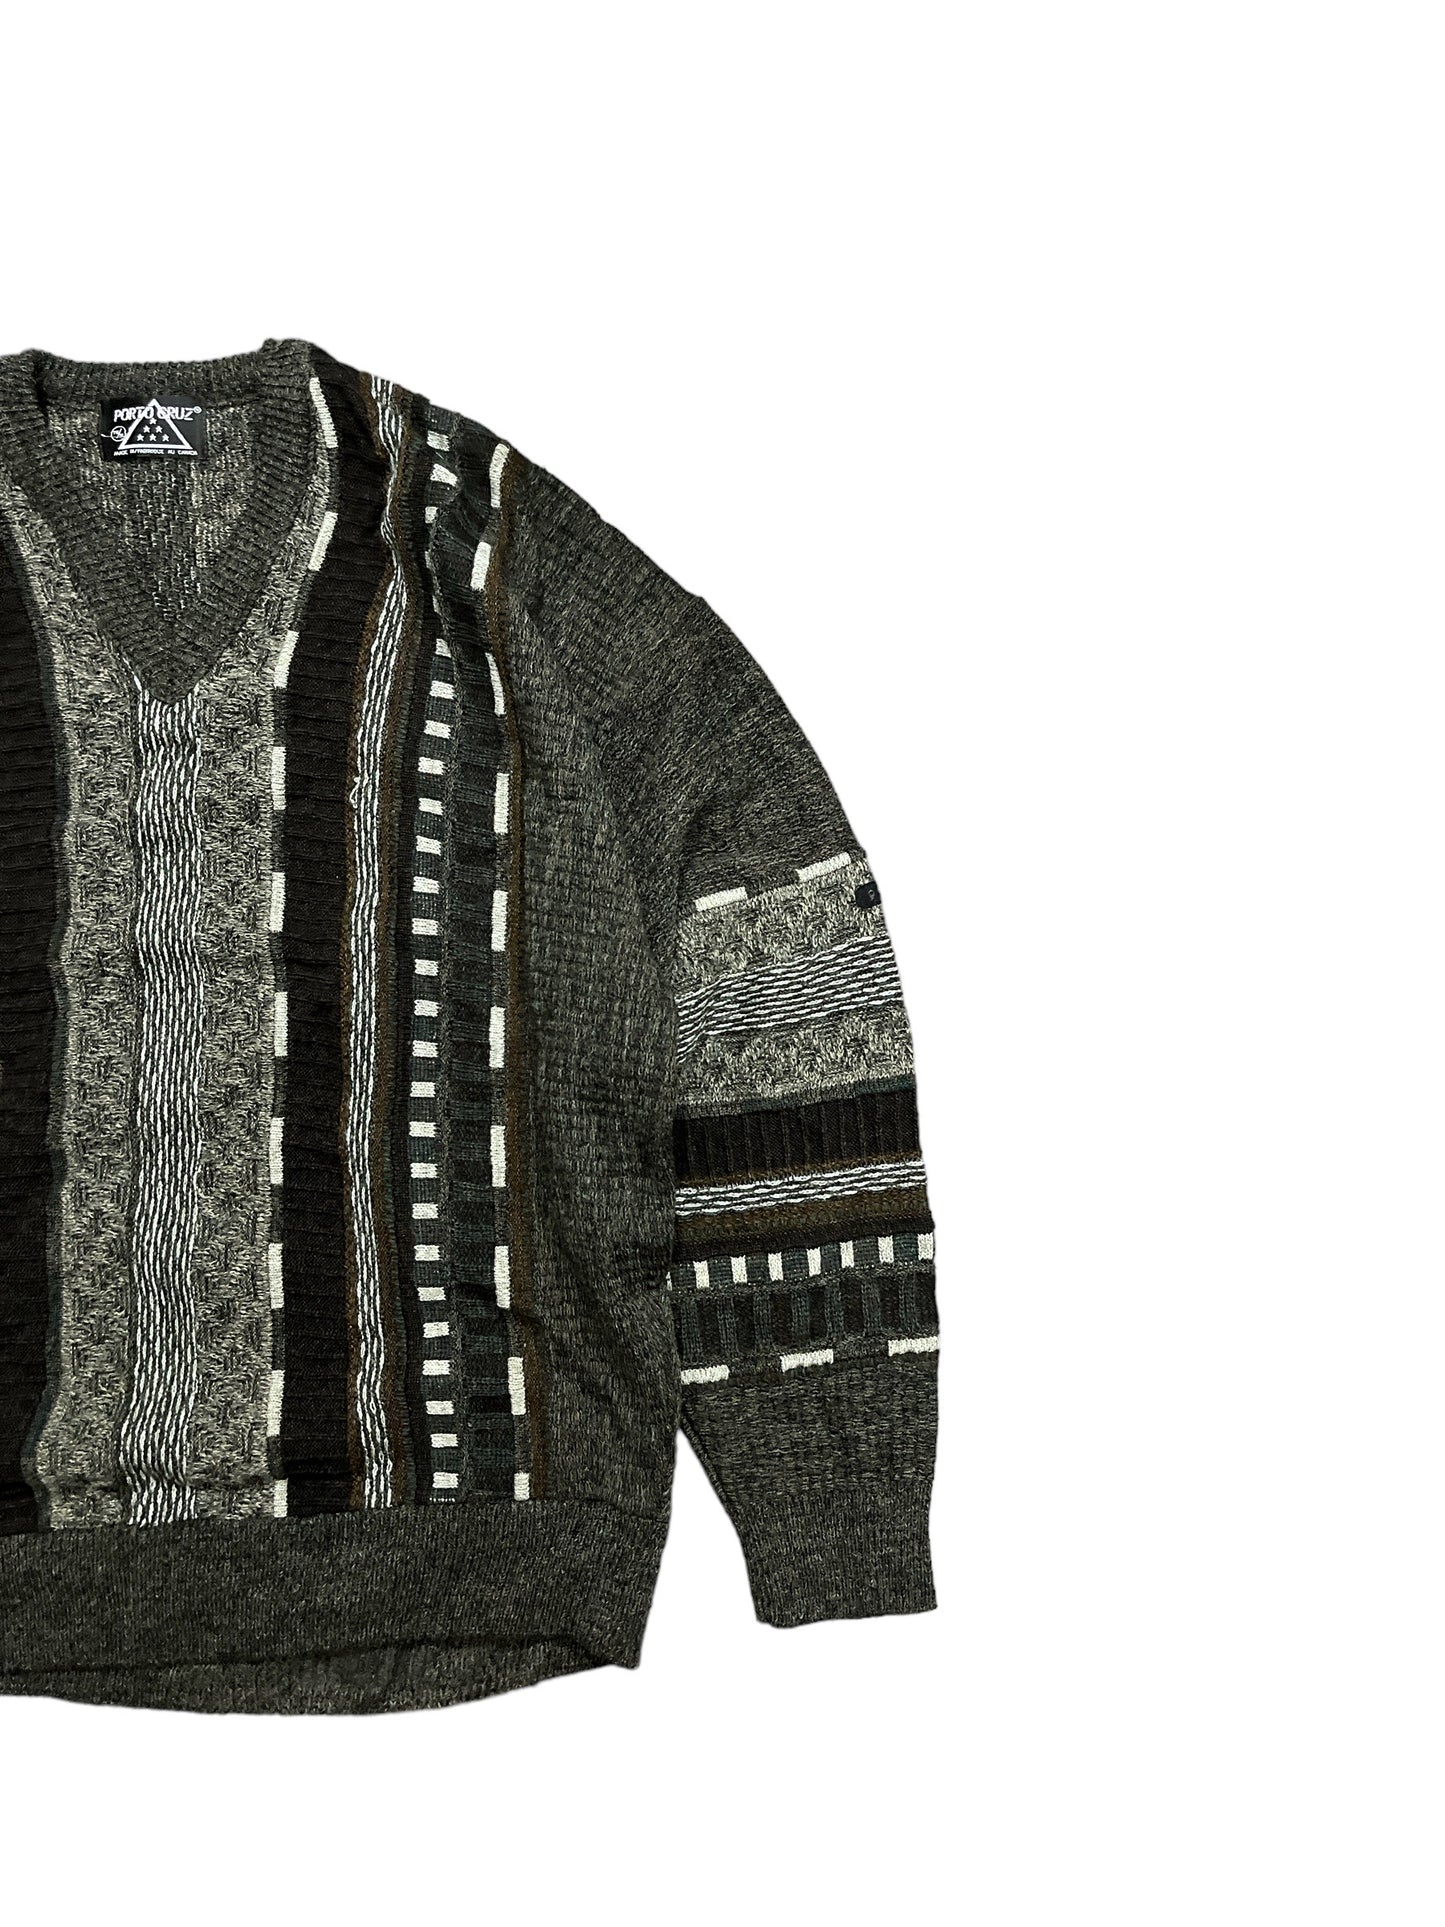 Vintage "Porto Cruz" Knit Sweater